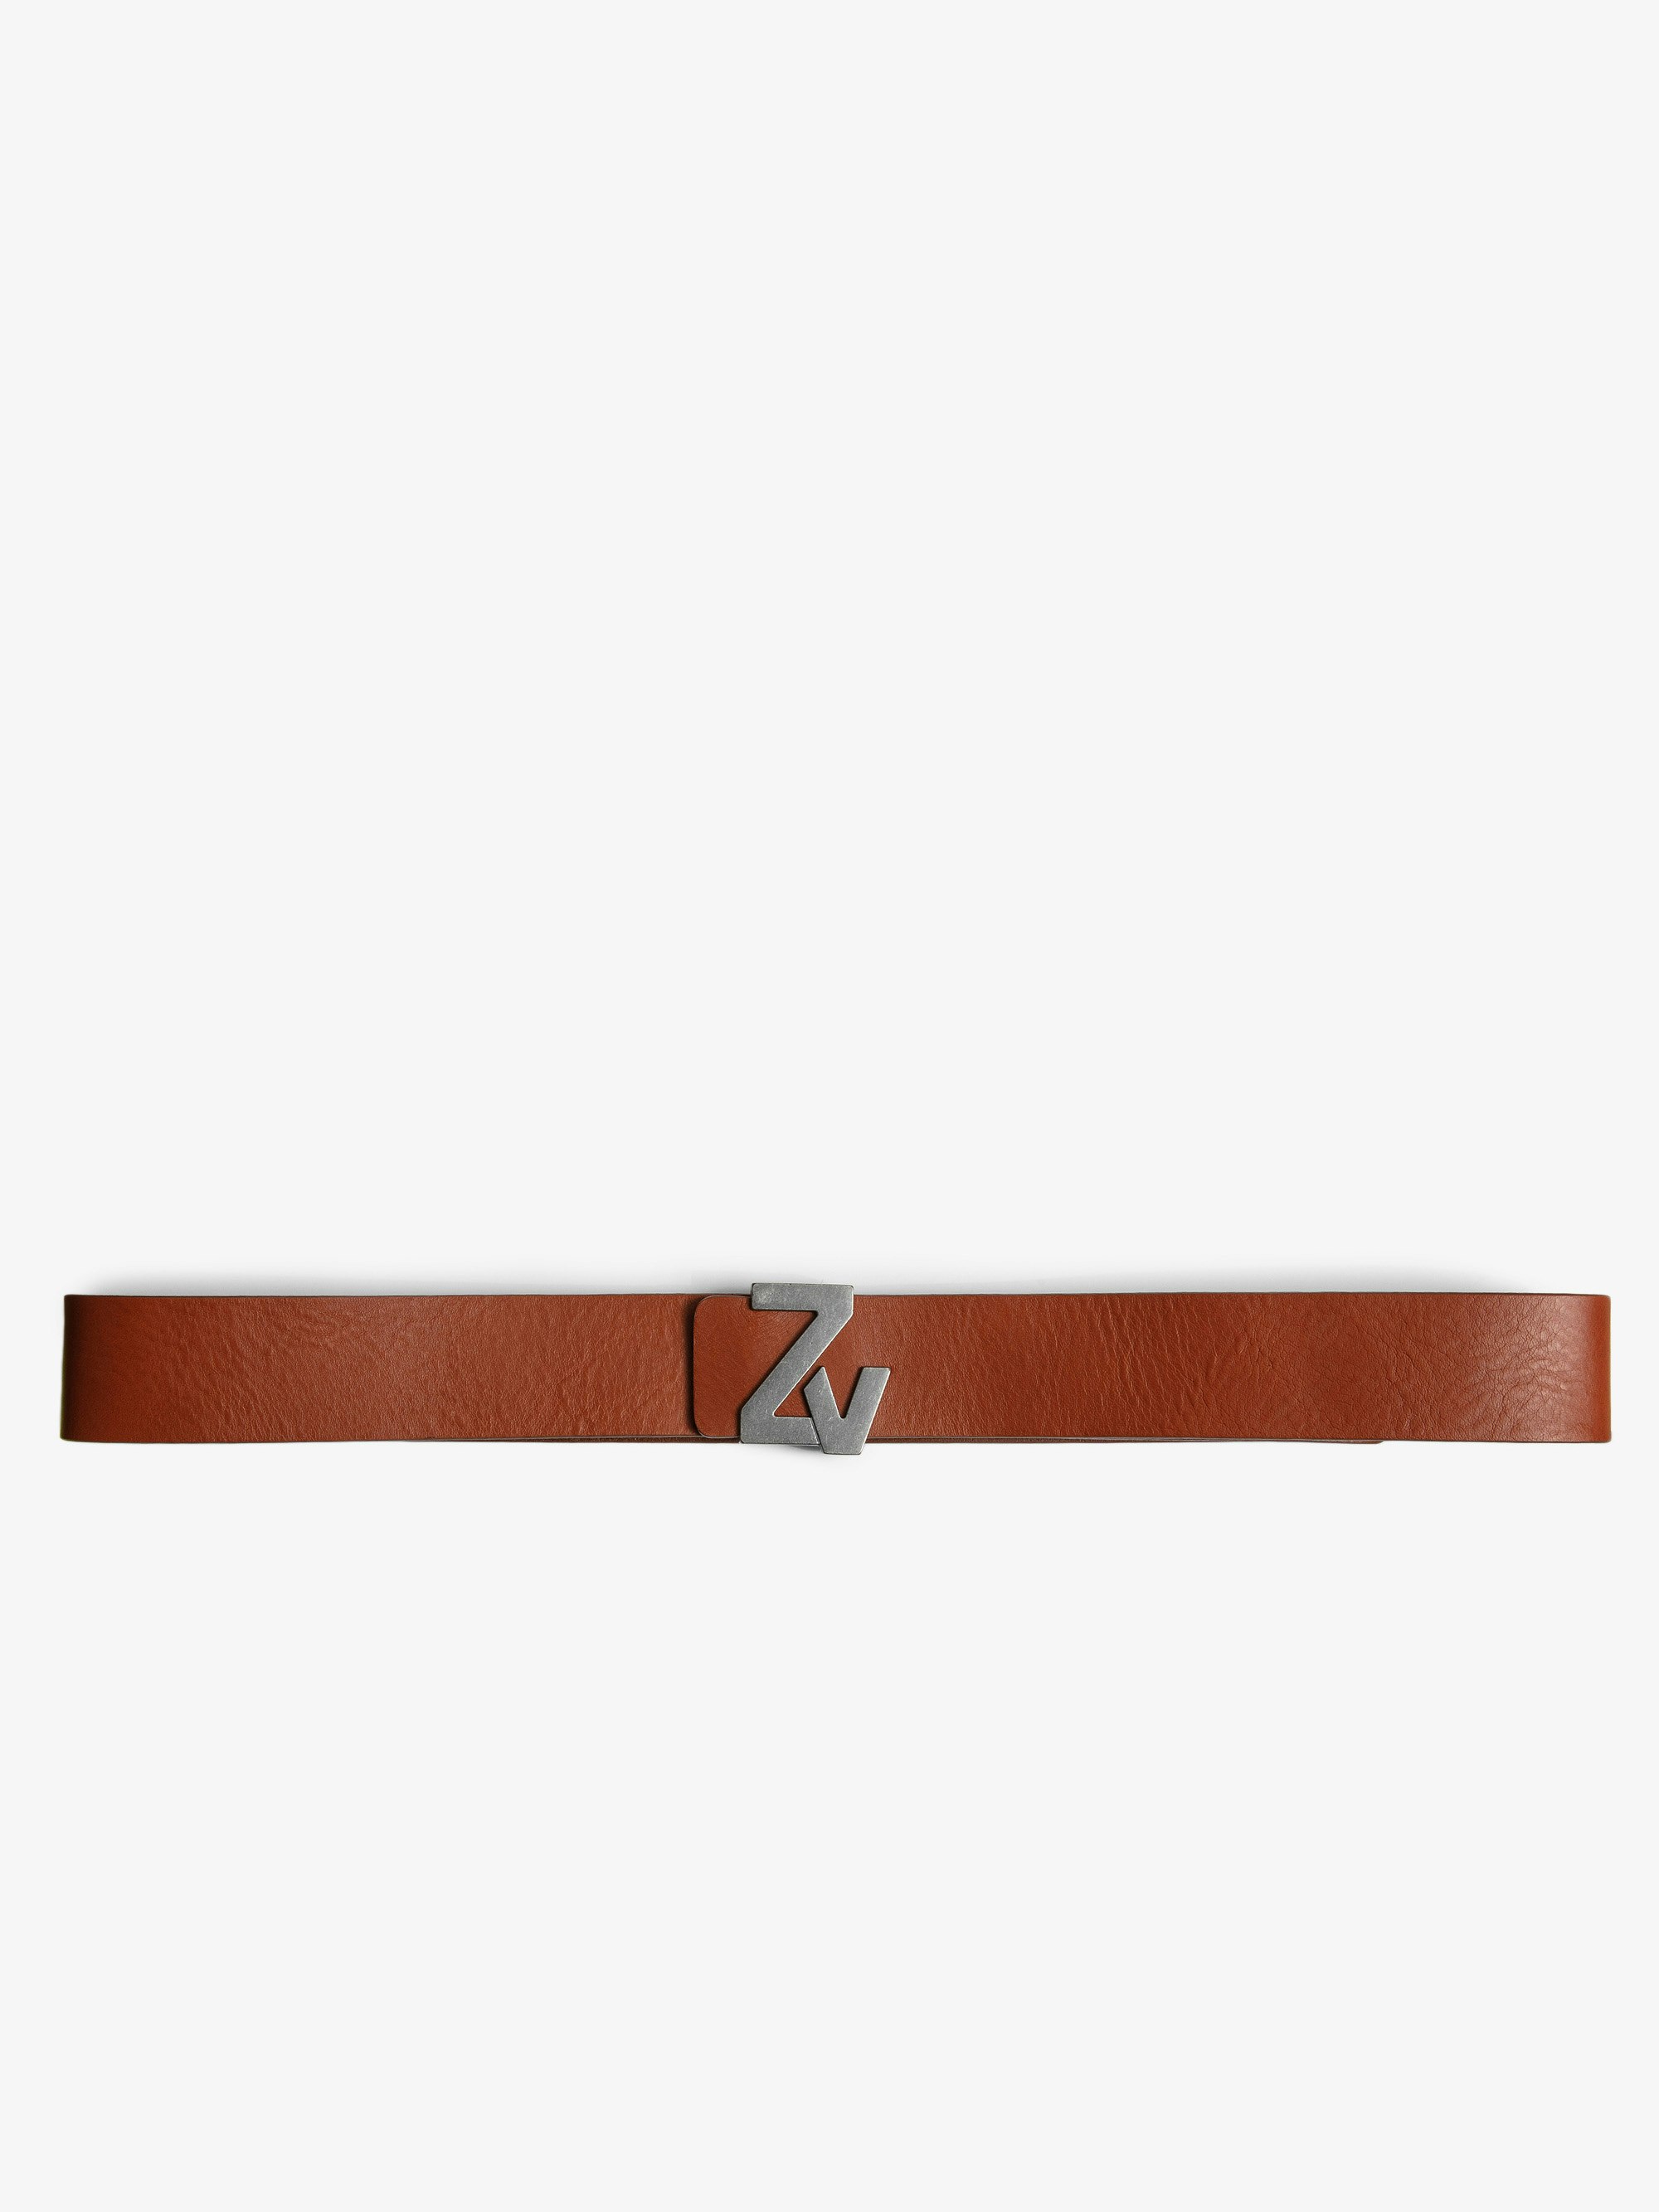 Gürtel ZV Initiale La Belt Leder - Herrengürtel aus cognacfarbenem Leder mit ZV-Schnalle